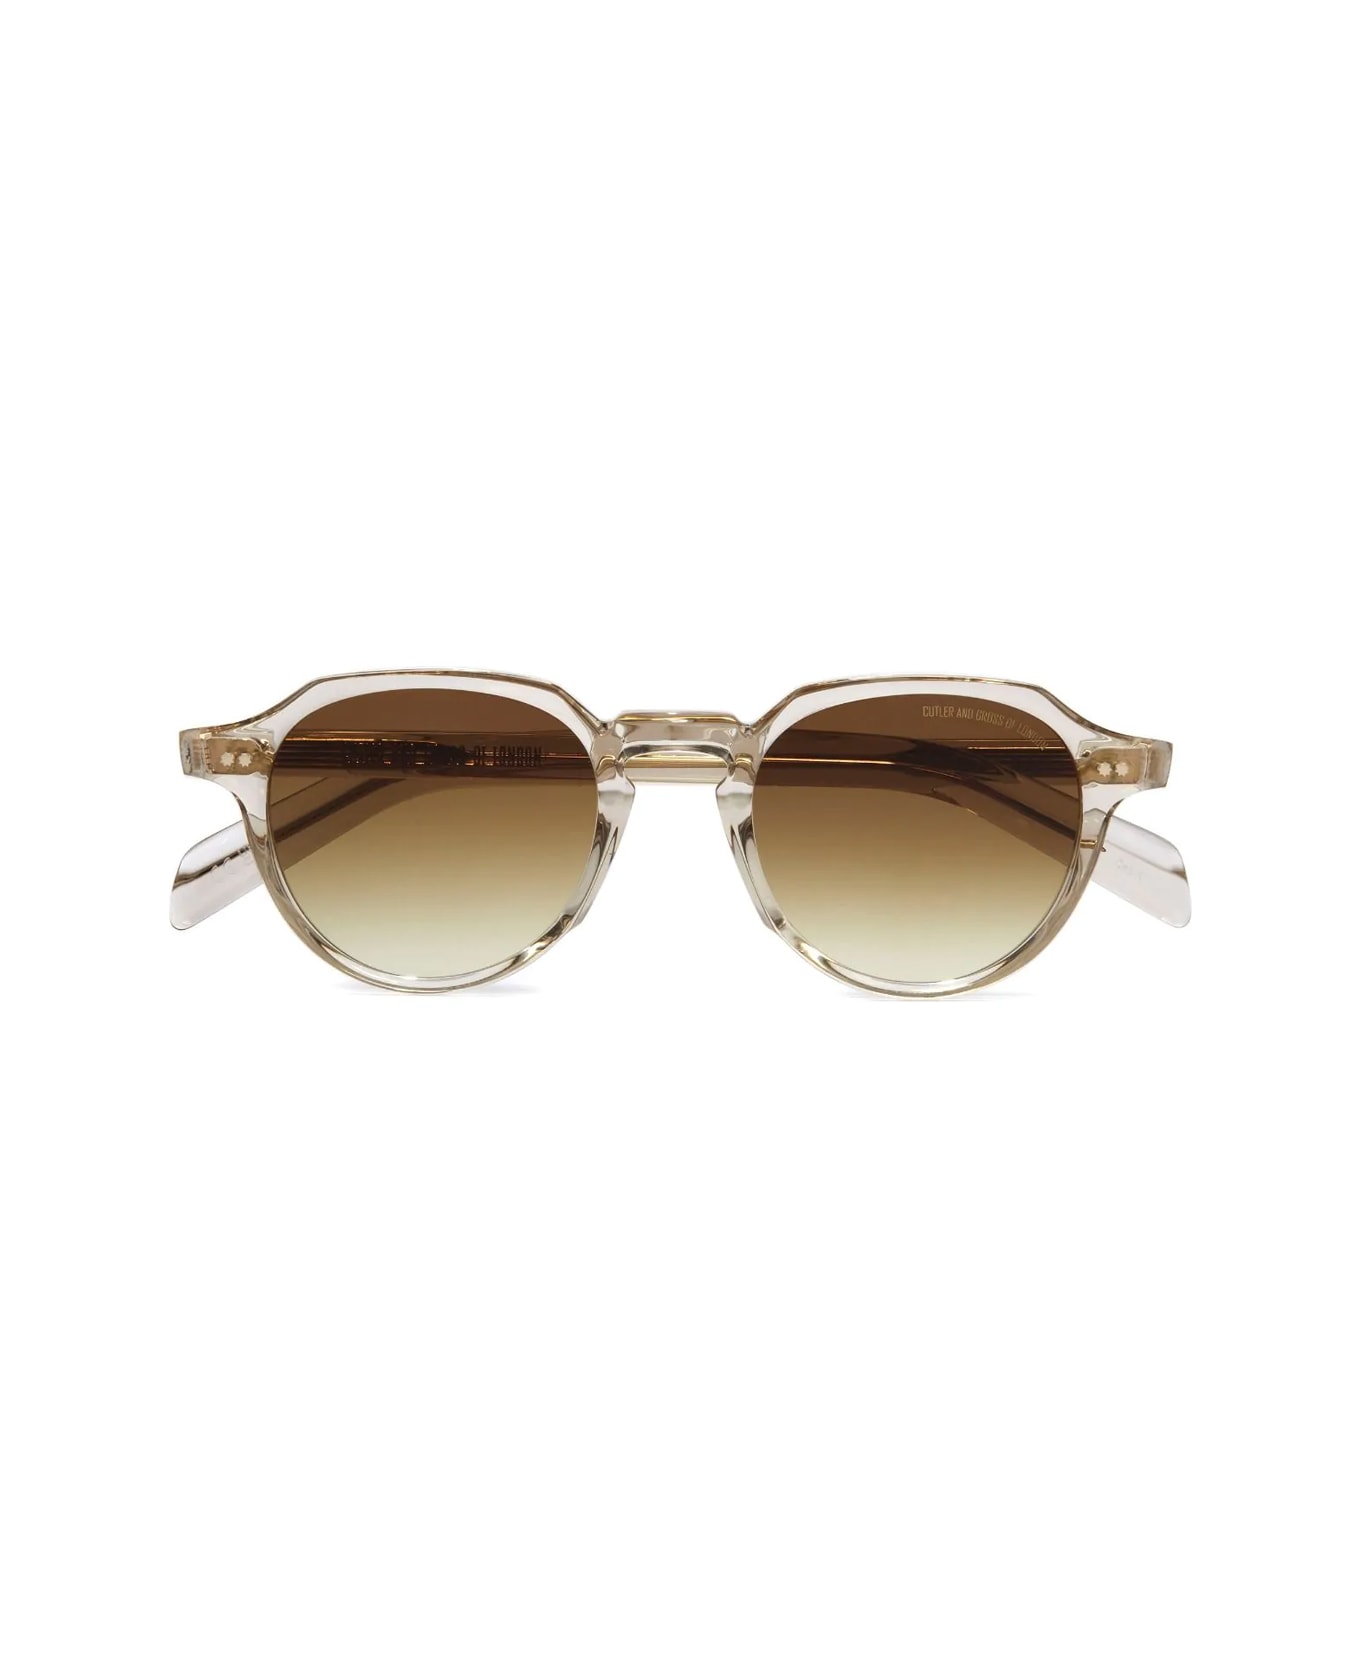 Cutler and Gross Gr06 03 Sand Crystal Sunglasses - Beige